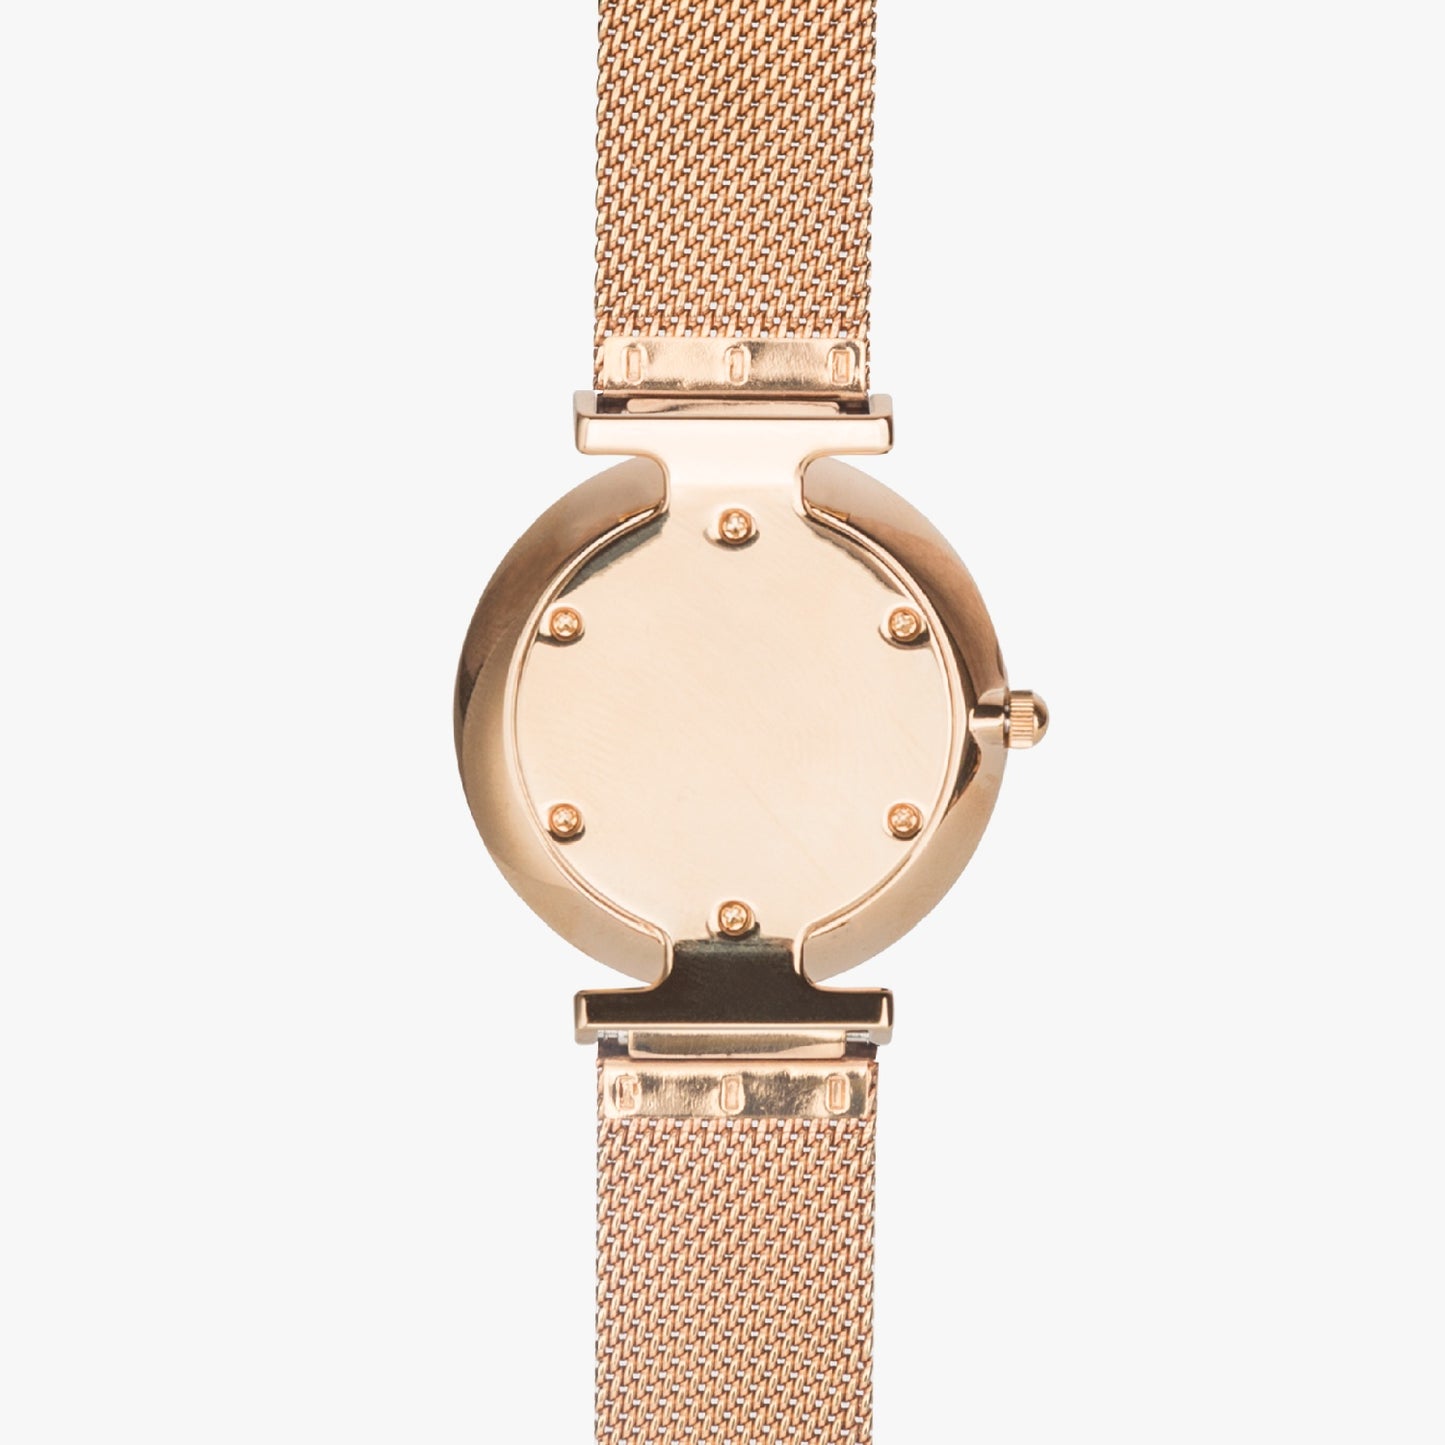 Ultra thin fashion quartz watch "Linea" (with indicators)